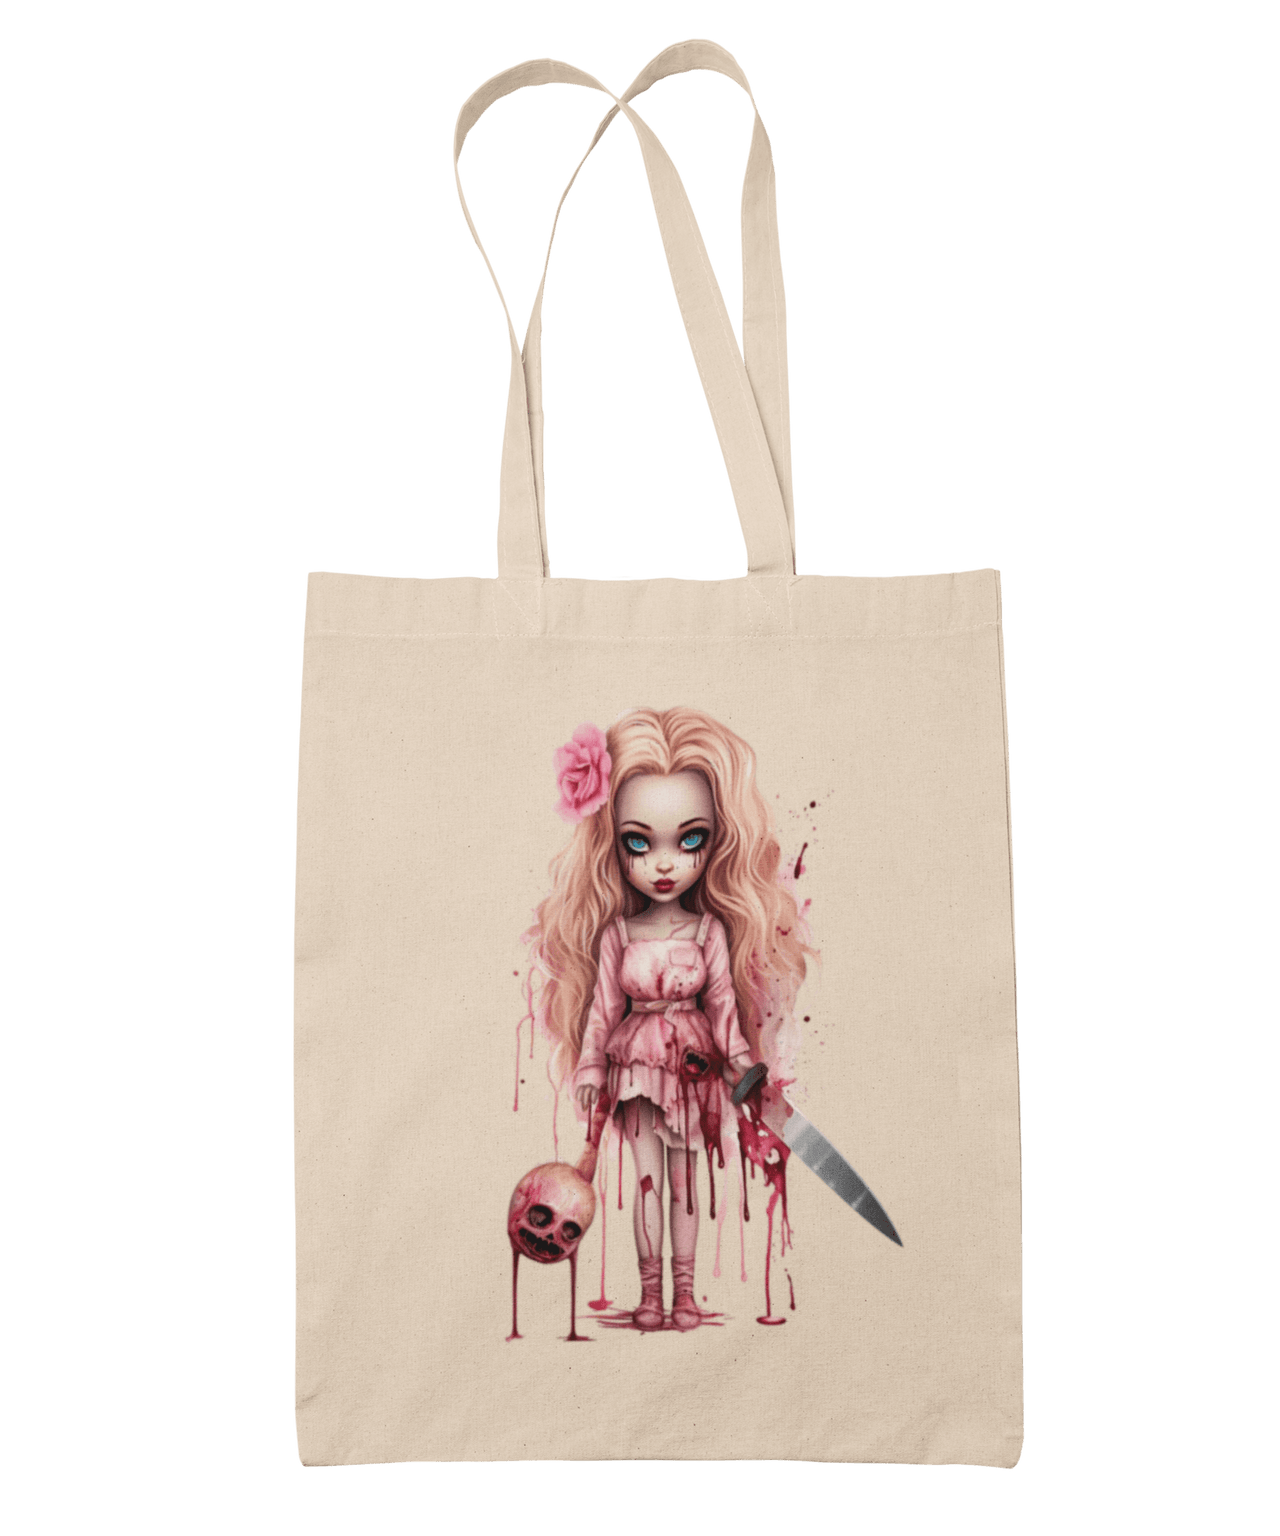 Murderous Gothic Barbie Tote Bag 8Ball